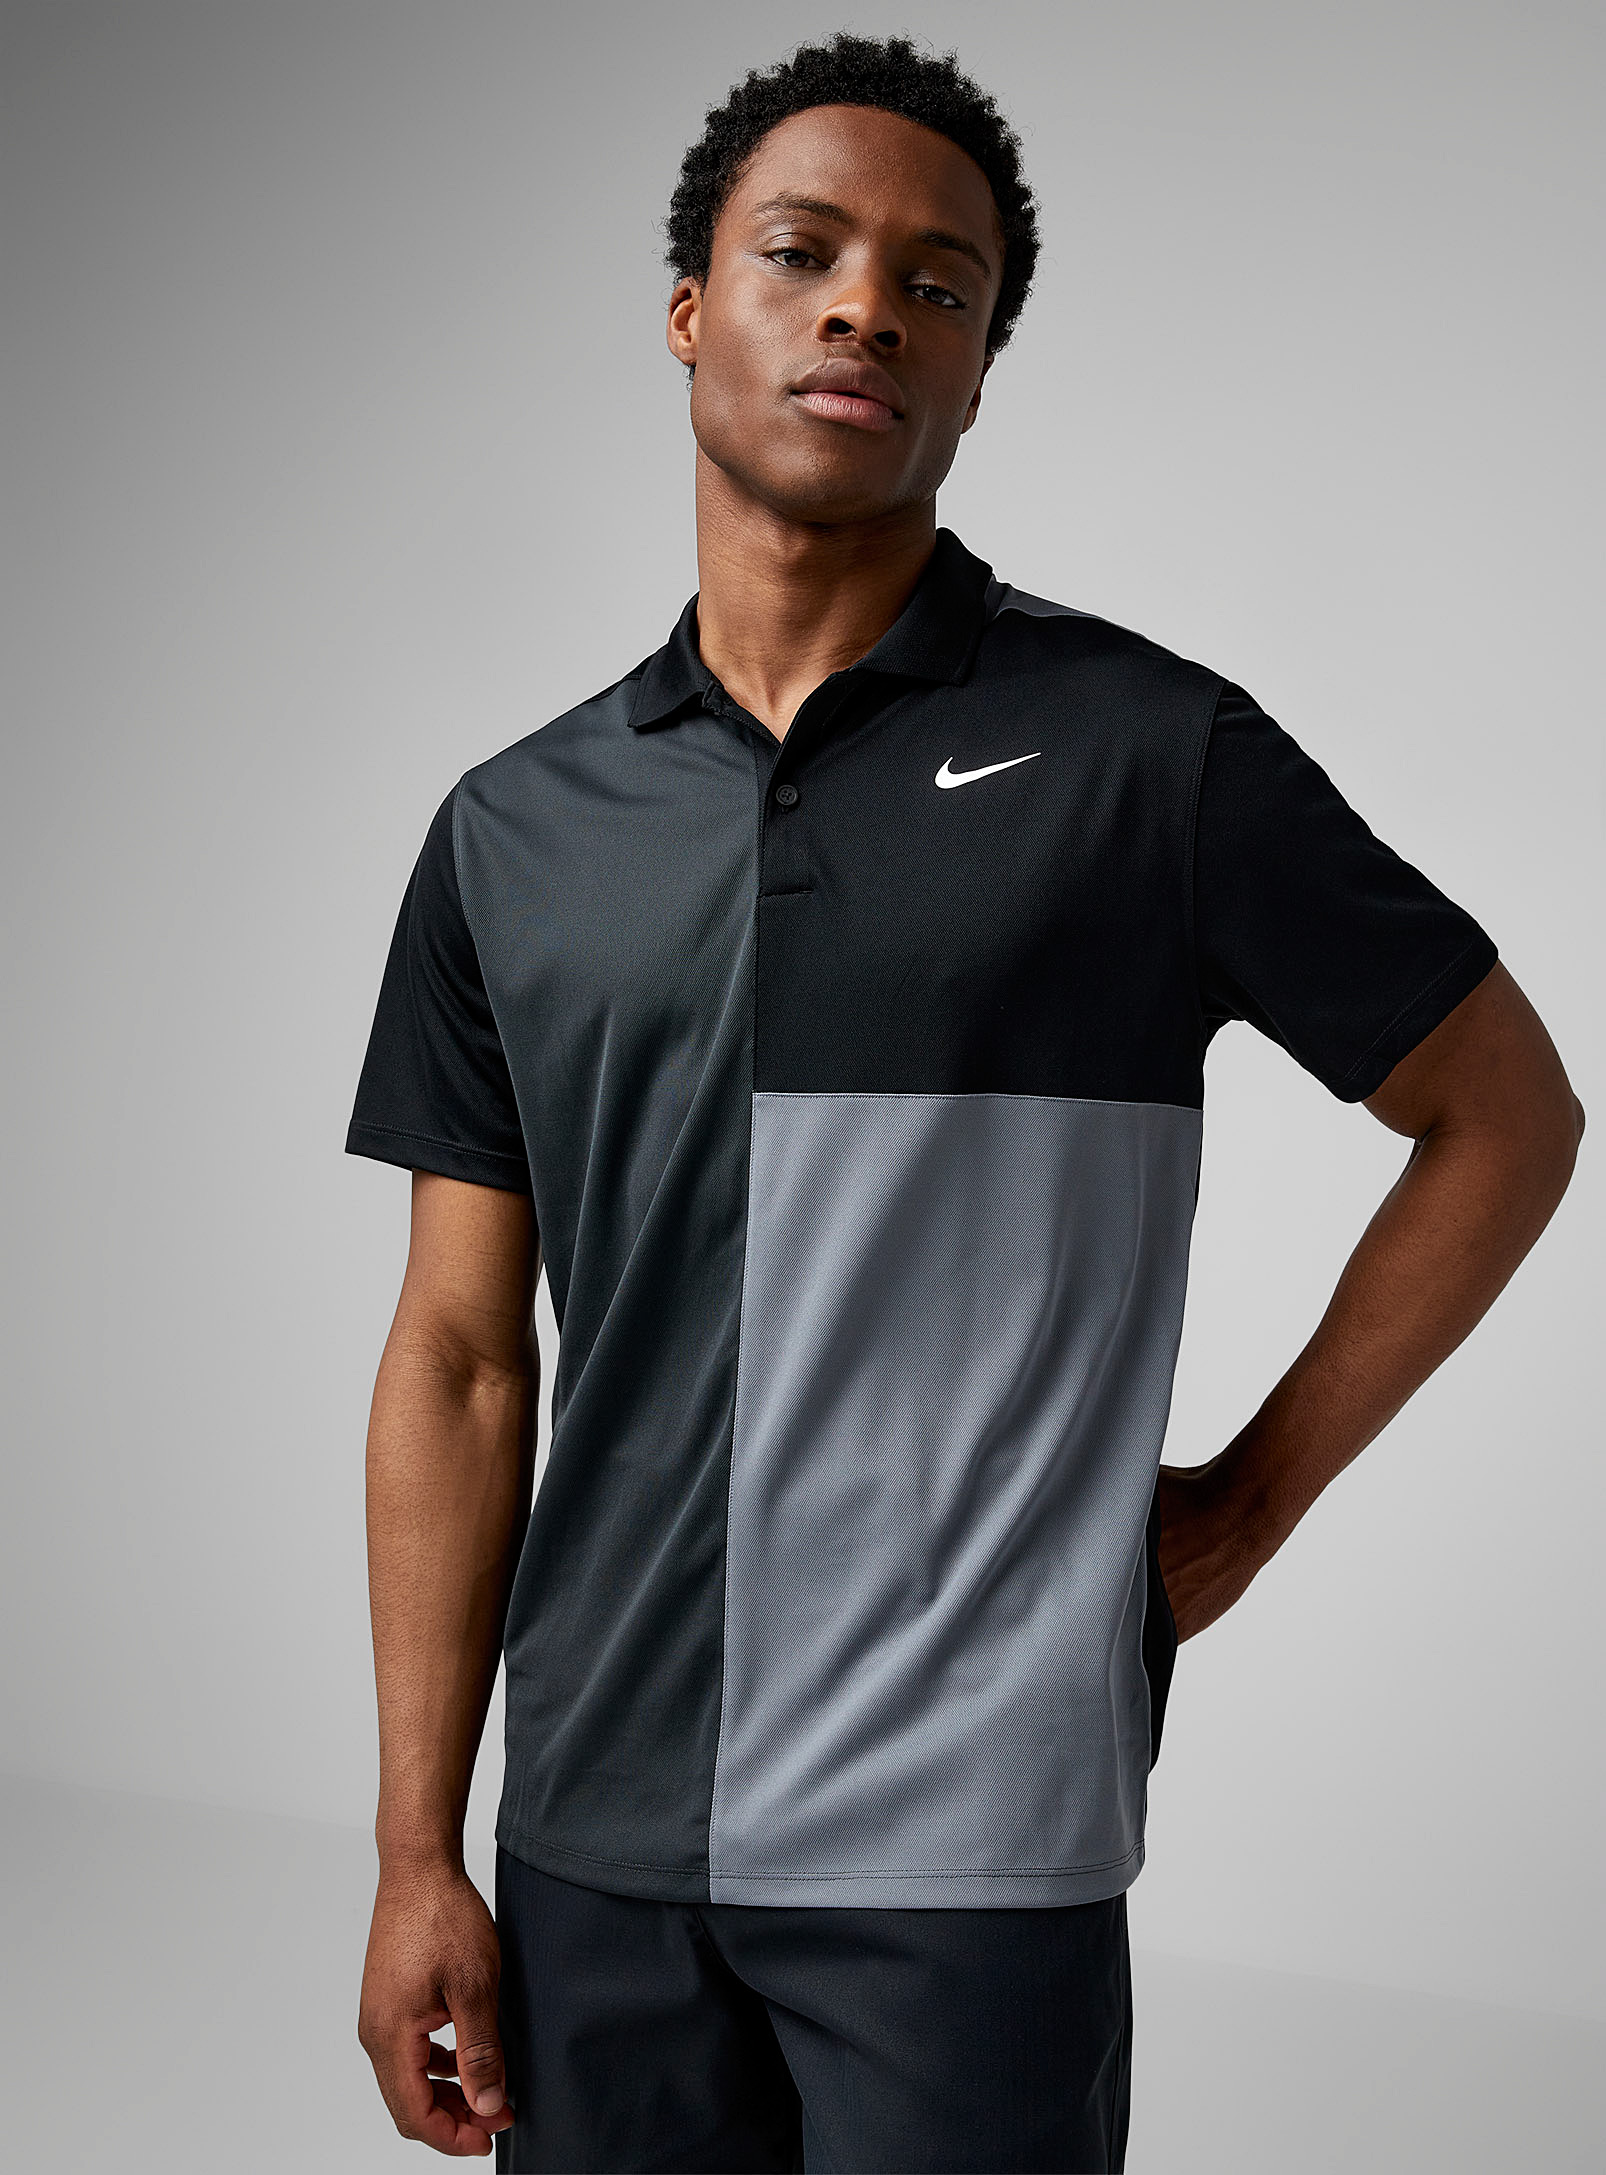 Nike golf - Le polo de blocs foncés